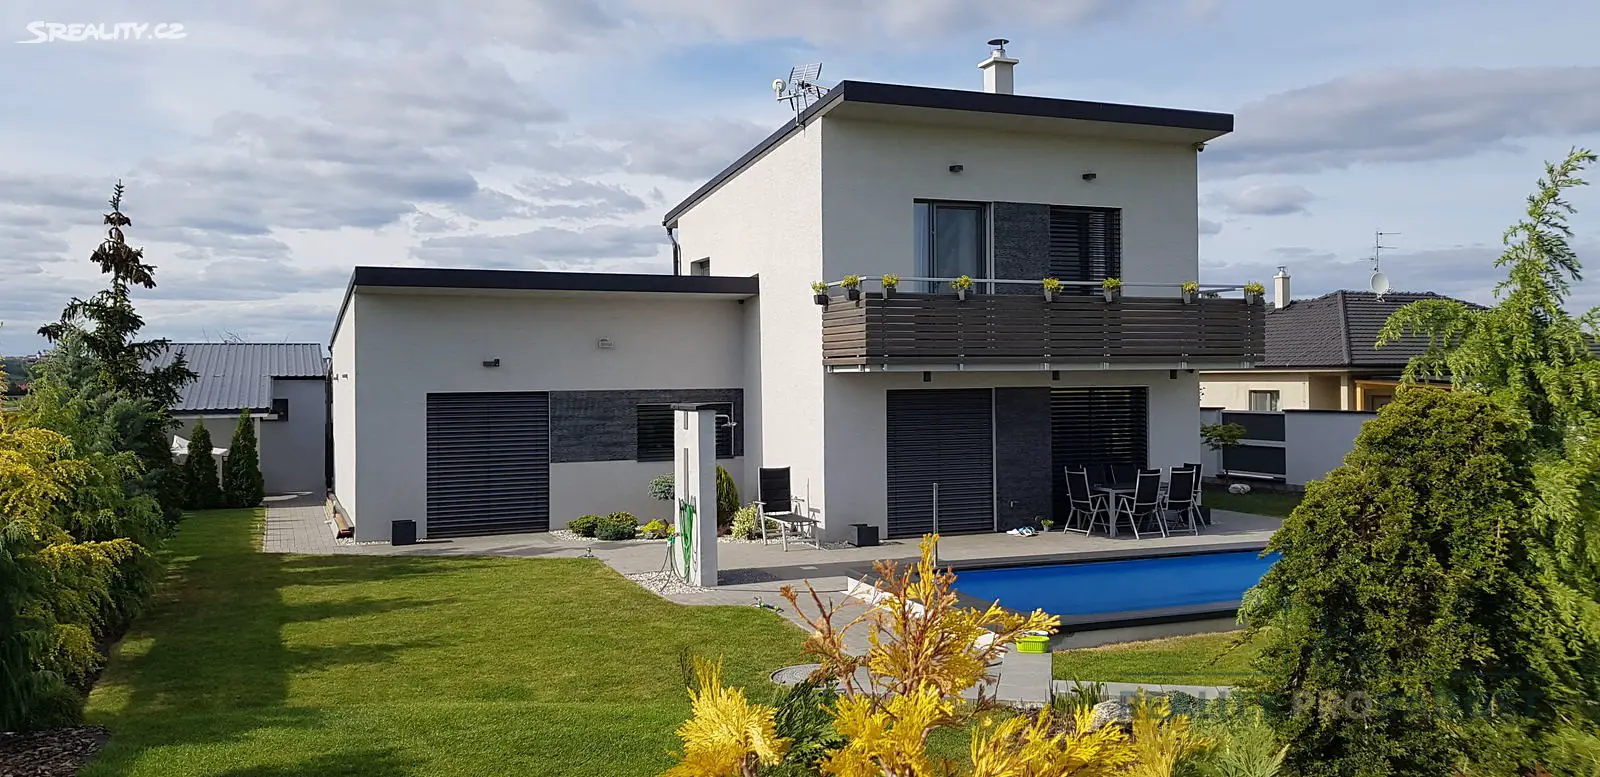 Prodej  rodinného domu 186 m², pozemek 655 m², Nový Šaldorf-Sedlešovice - Nový Šaldorf, okres Znojmo